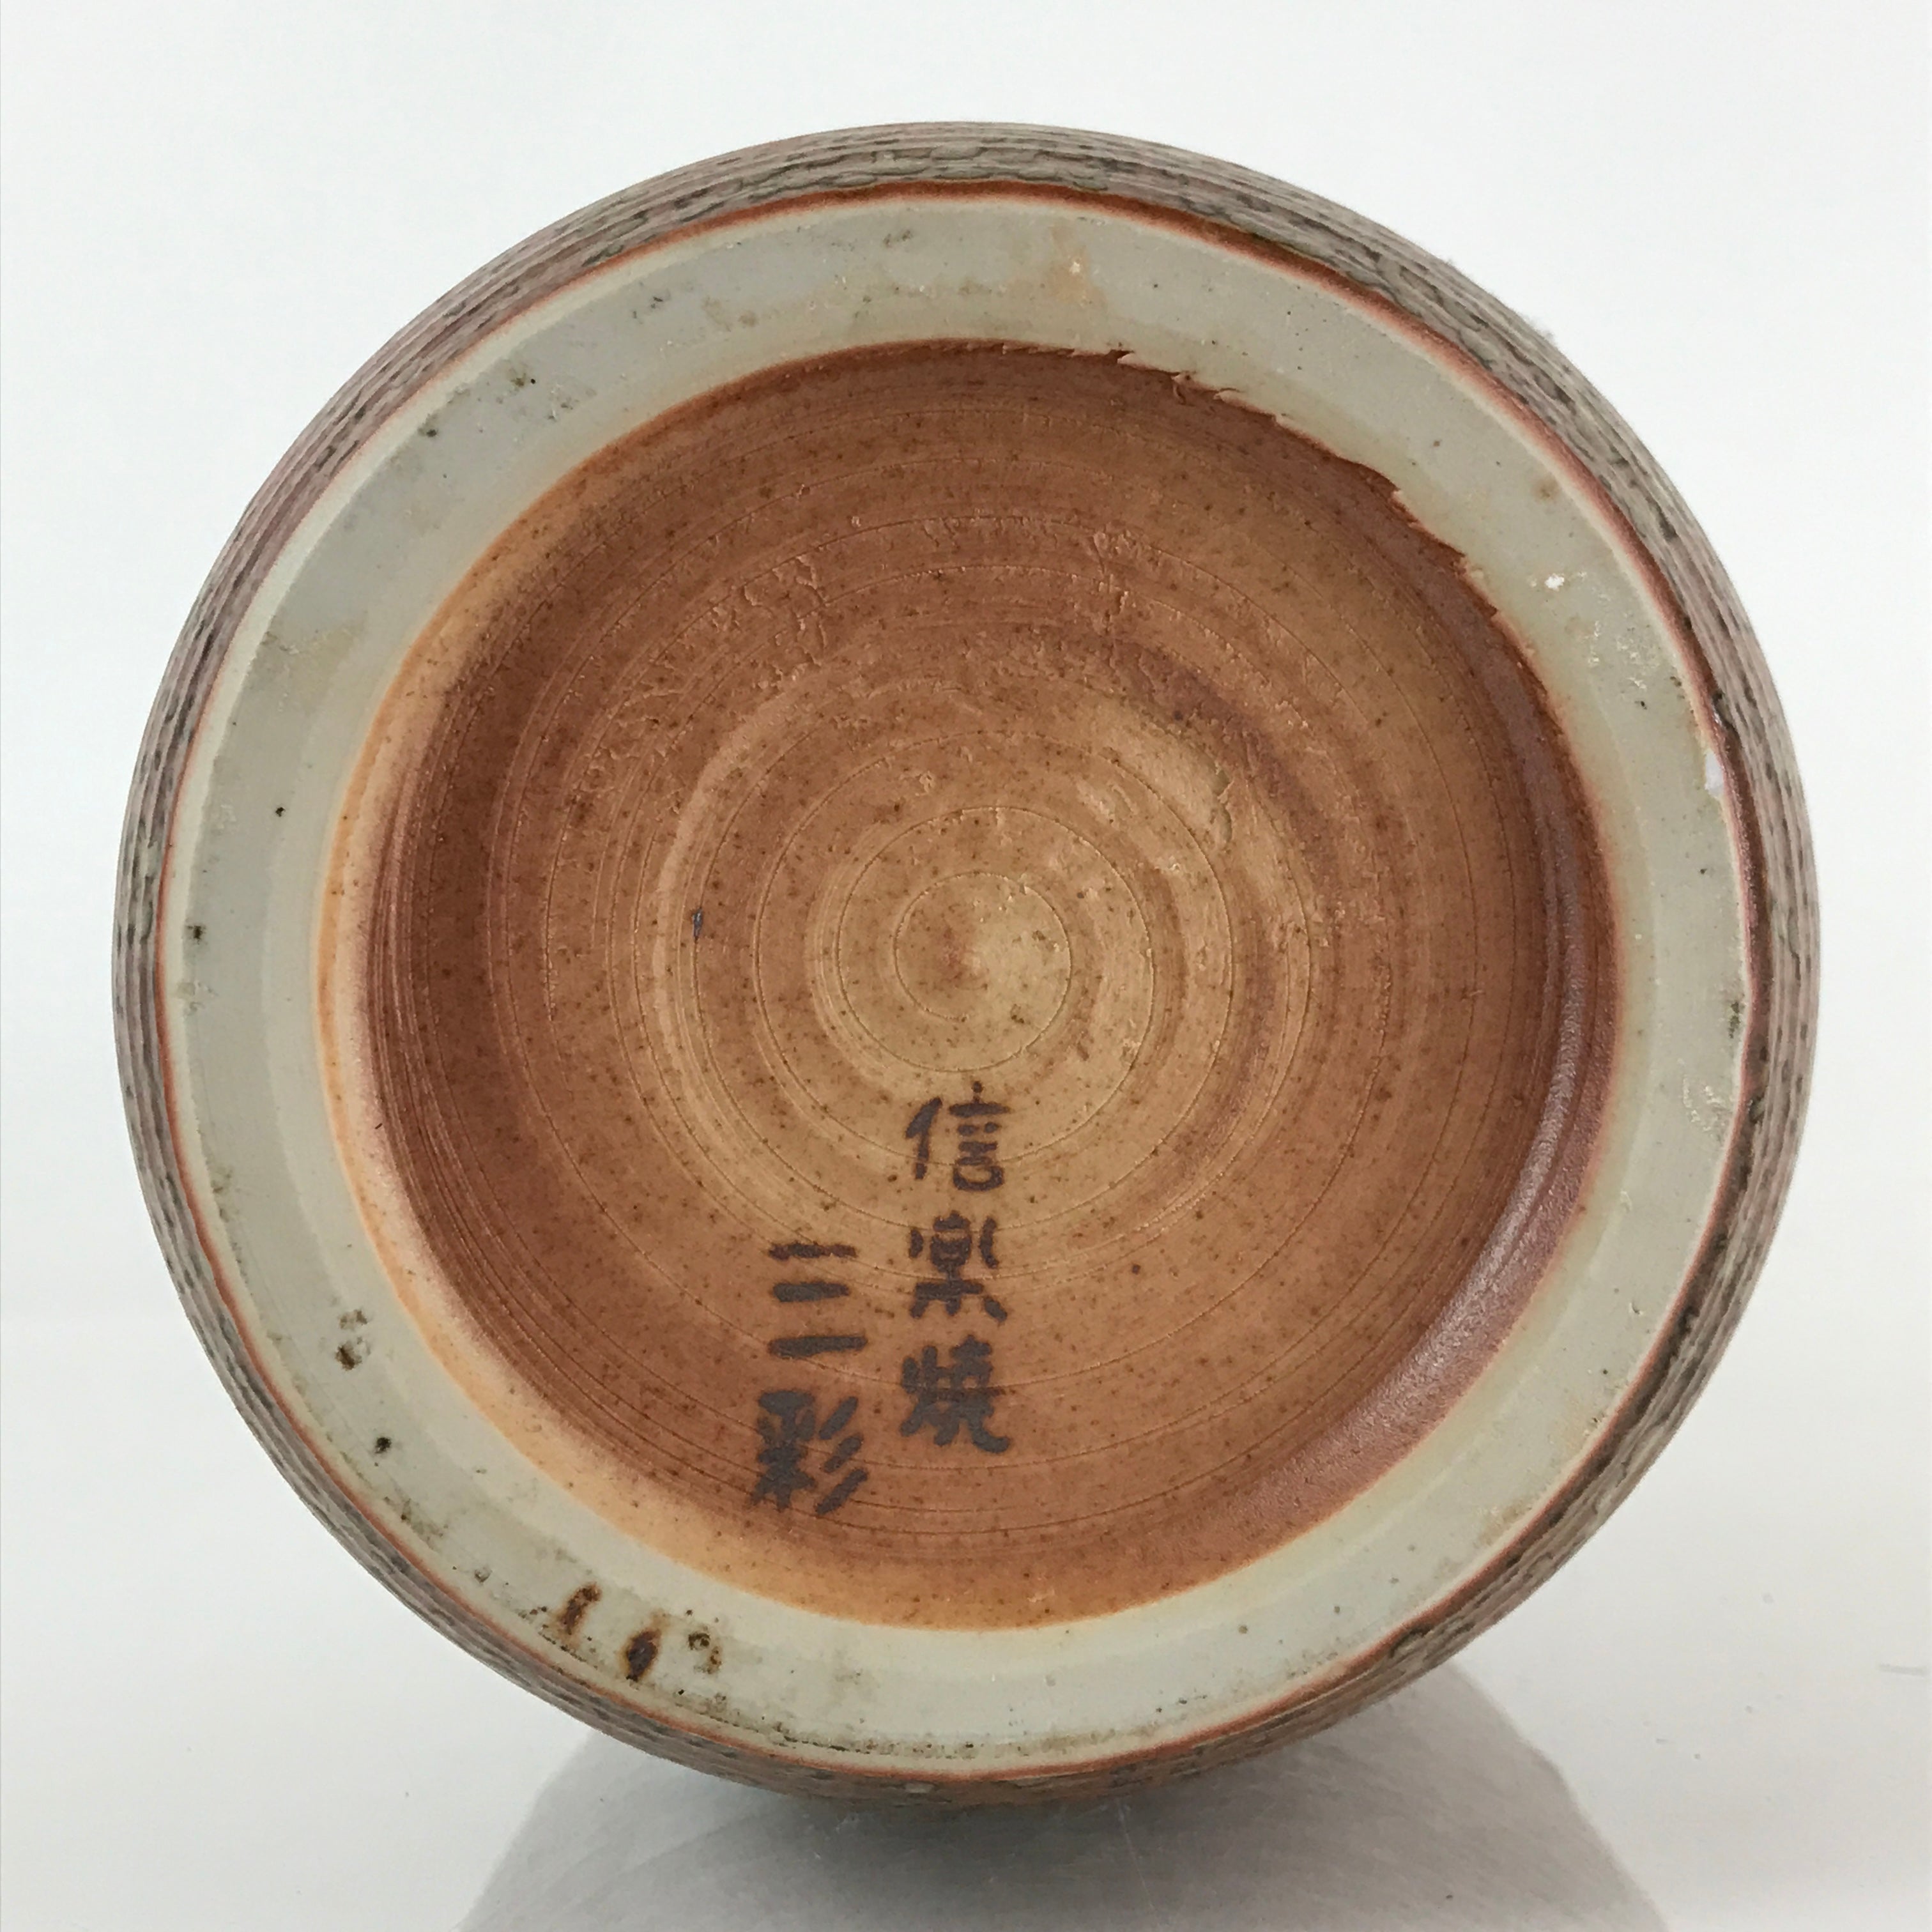 Japanese Ceramic Shigaraki ware Sake Bottle Vtg Pottery Ash Glaze TS449